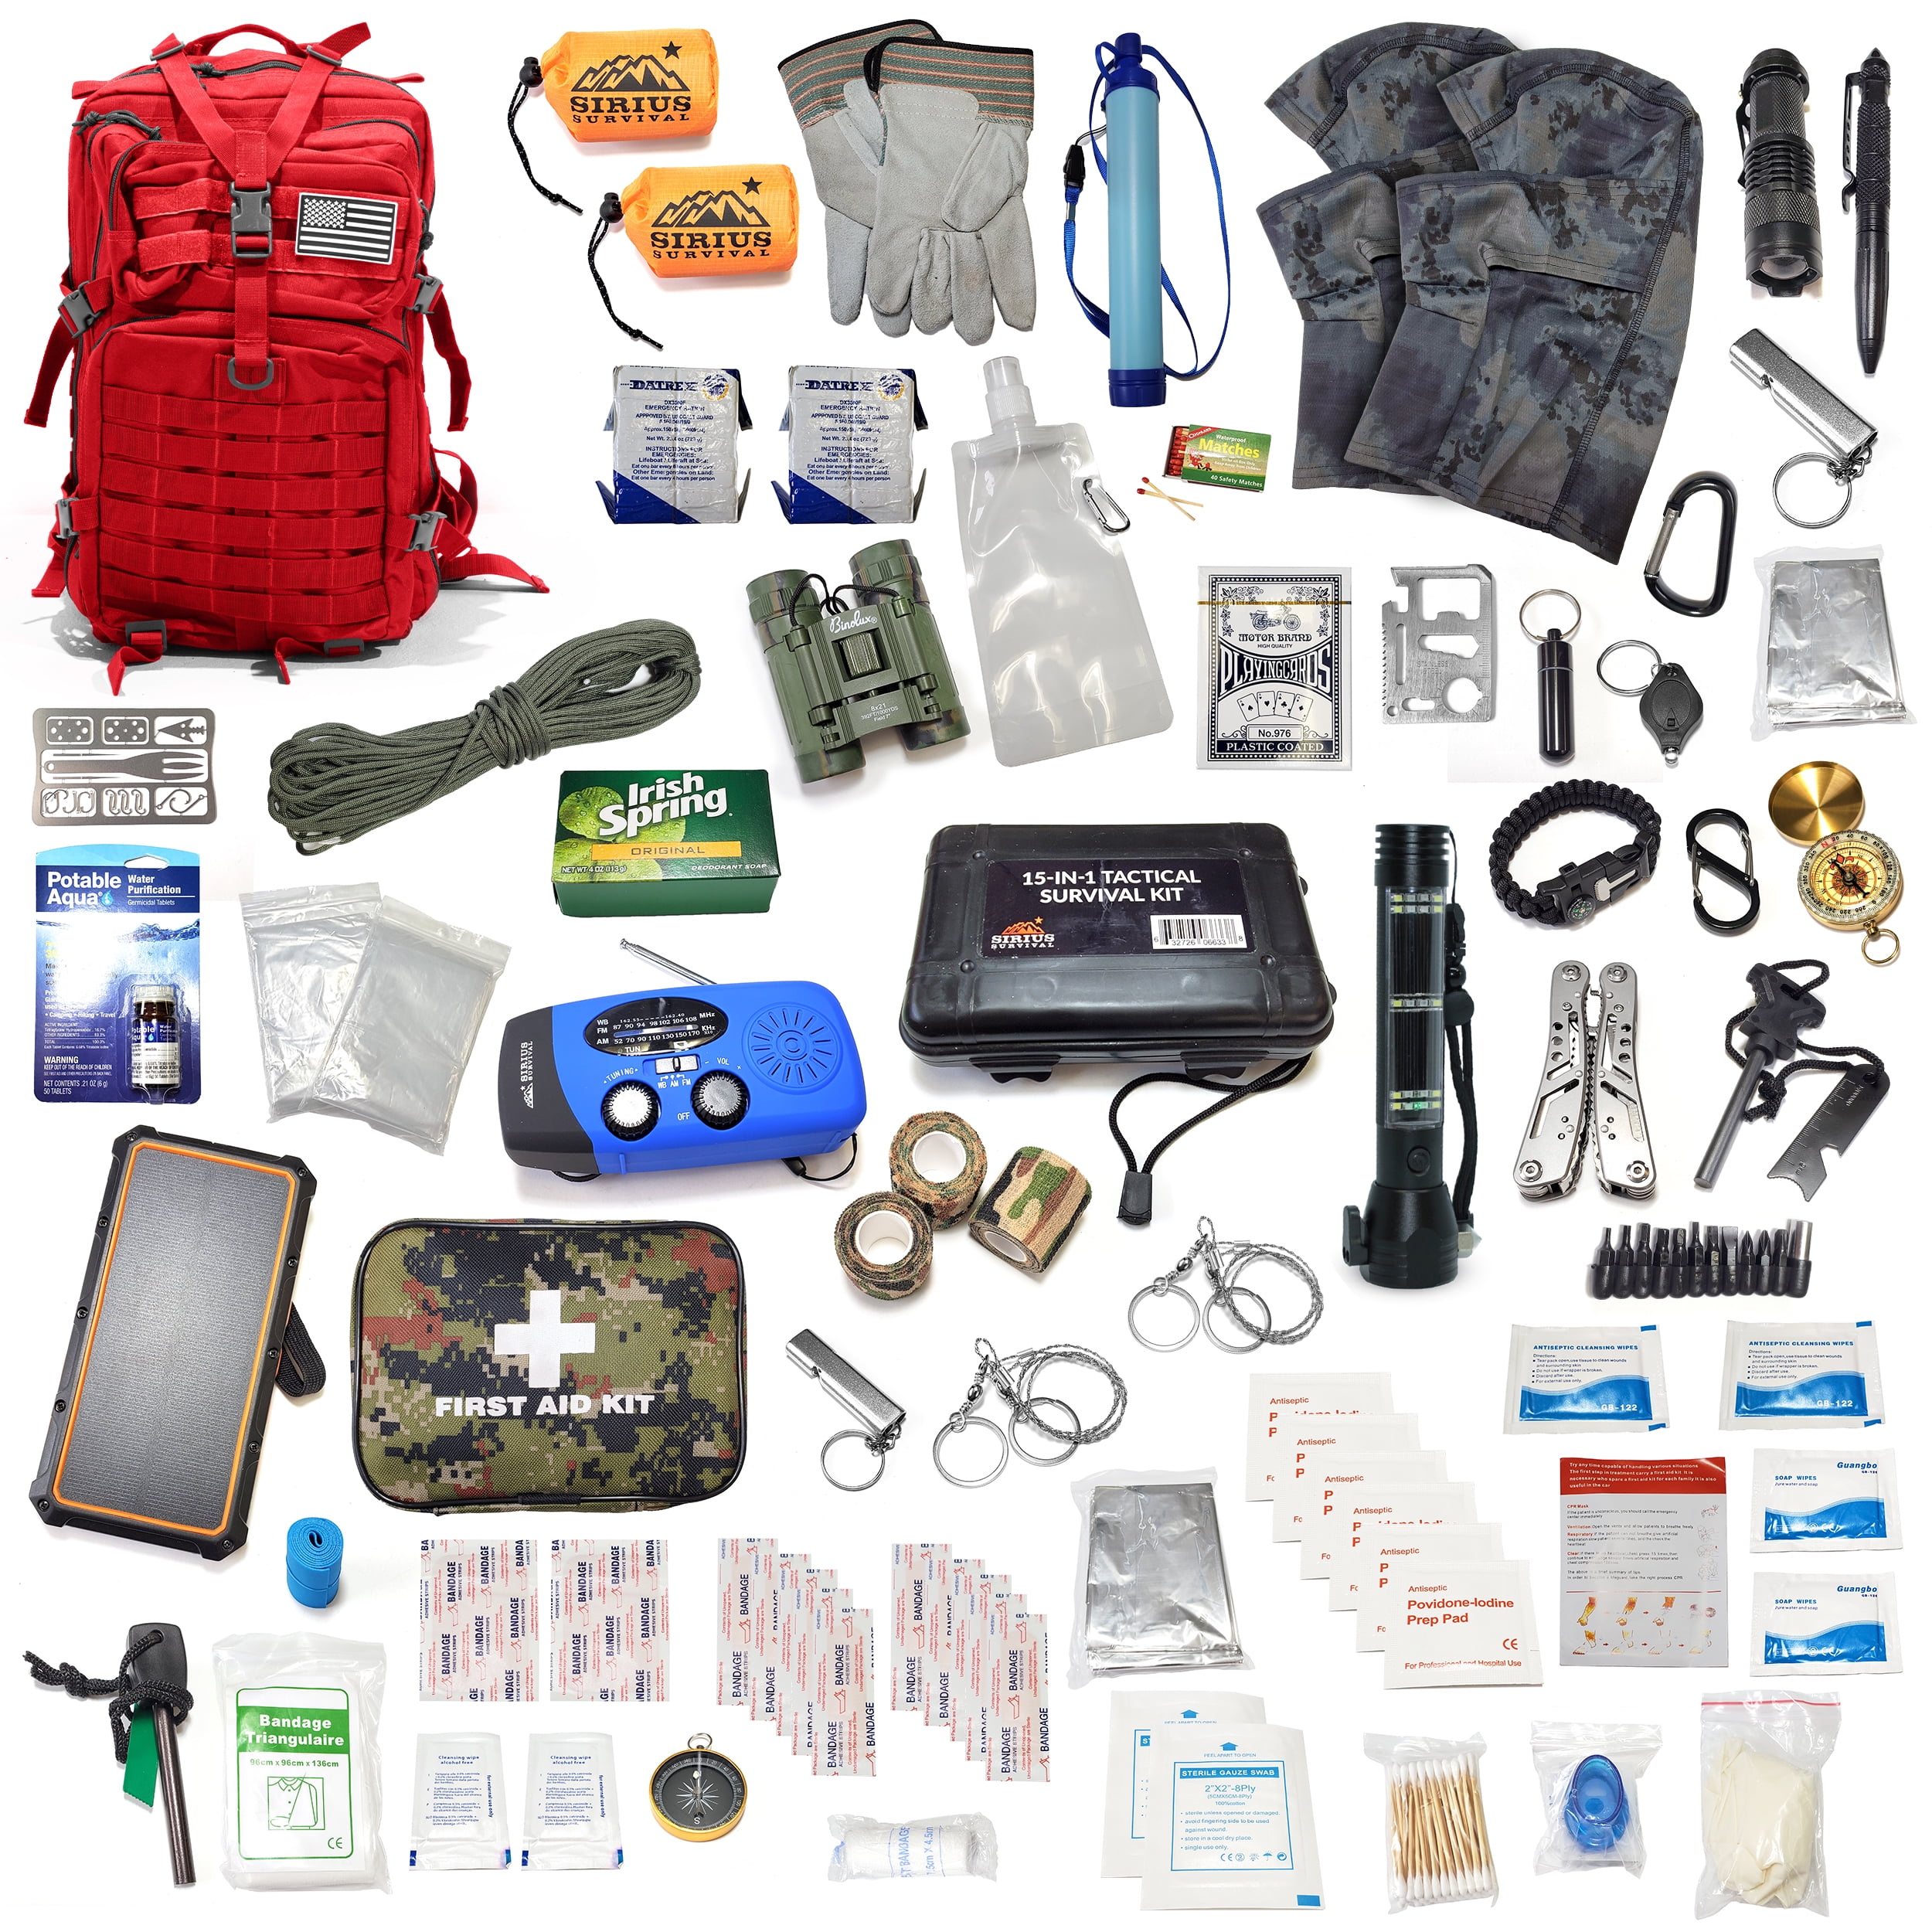 Get Home Bag / Survival Kit - The Survival University